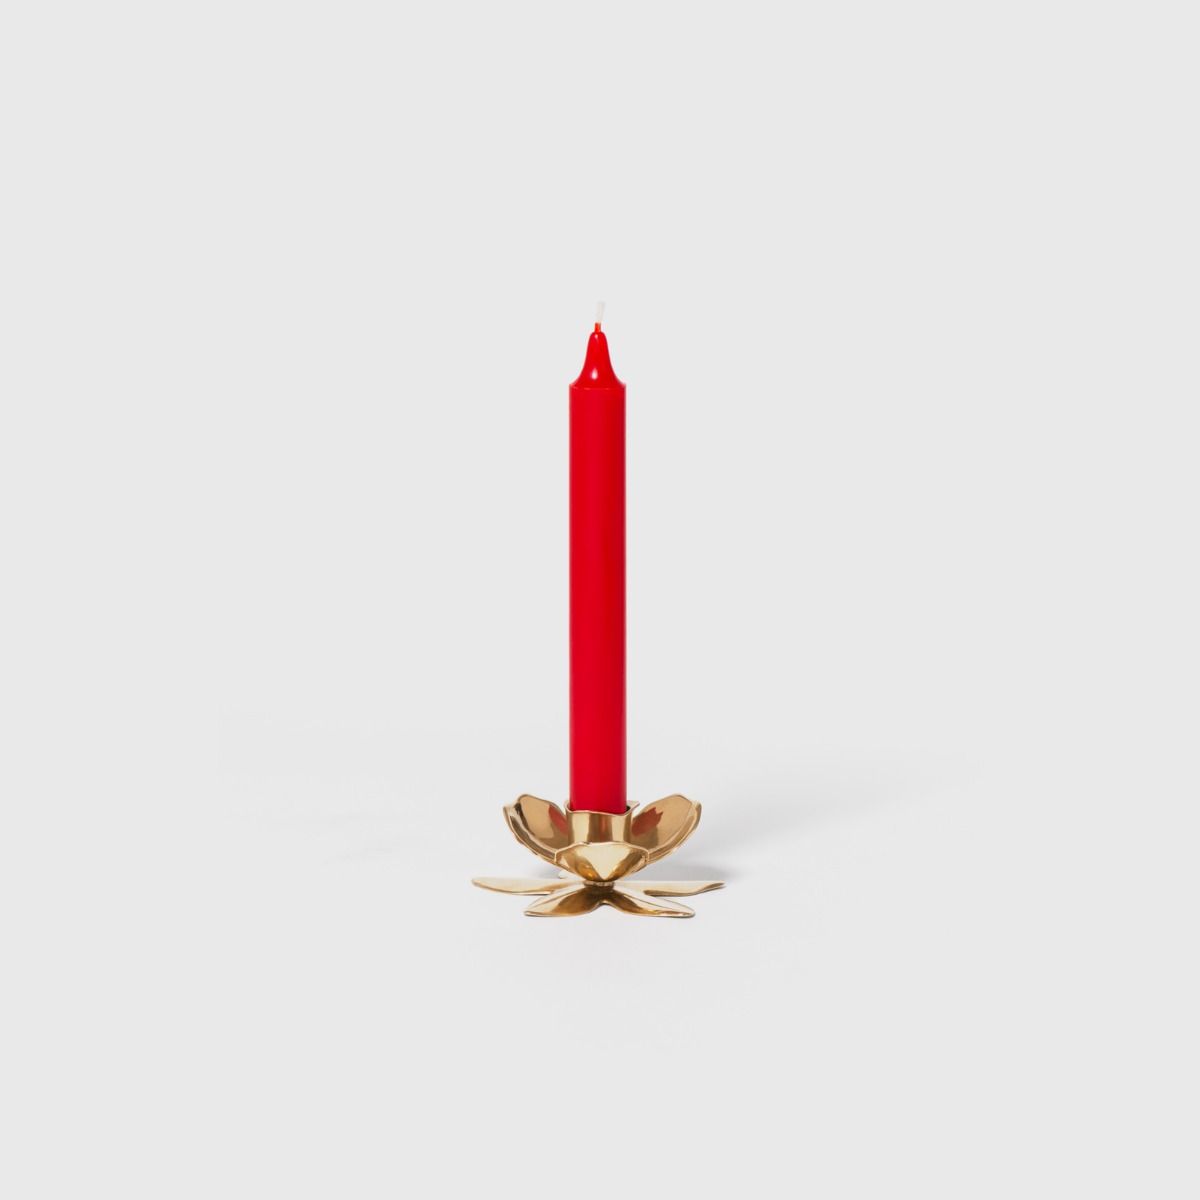 Flower candlestick - Accessories